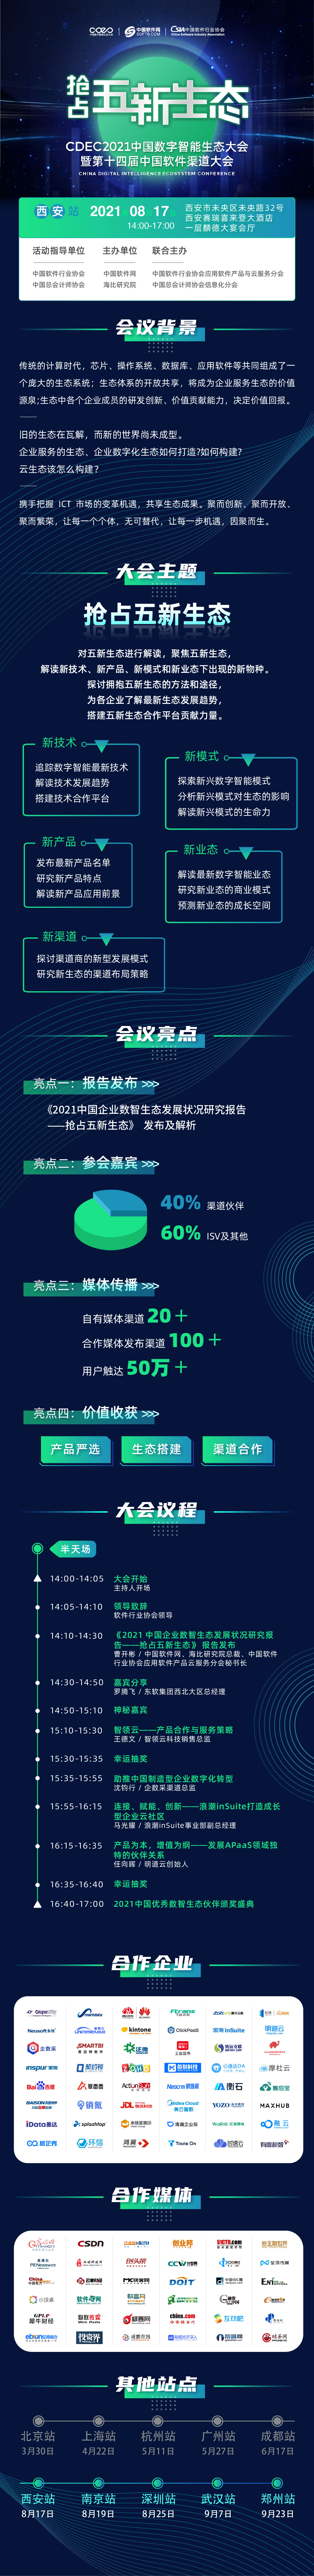 CDEC2021中国数字智能生态大会暨第十四届中国软件渠道大会-西安站